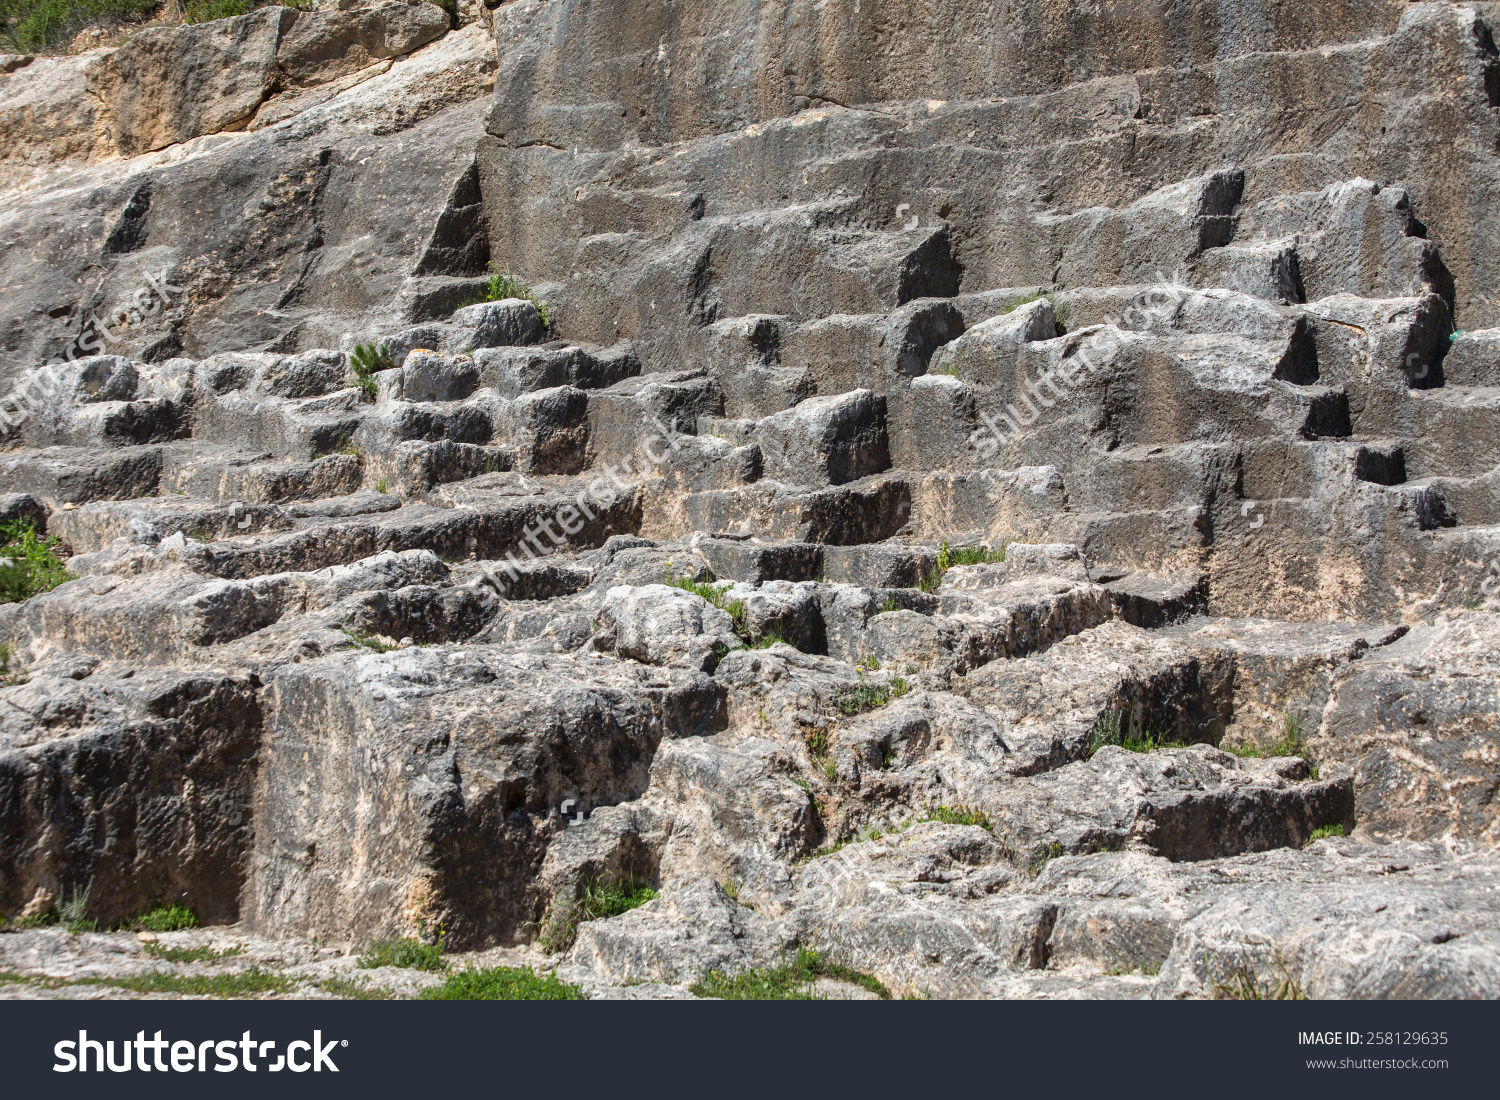 Old Rock Quarry, Carmel, Israel Stock Photo 258129635 : Shutterstock.